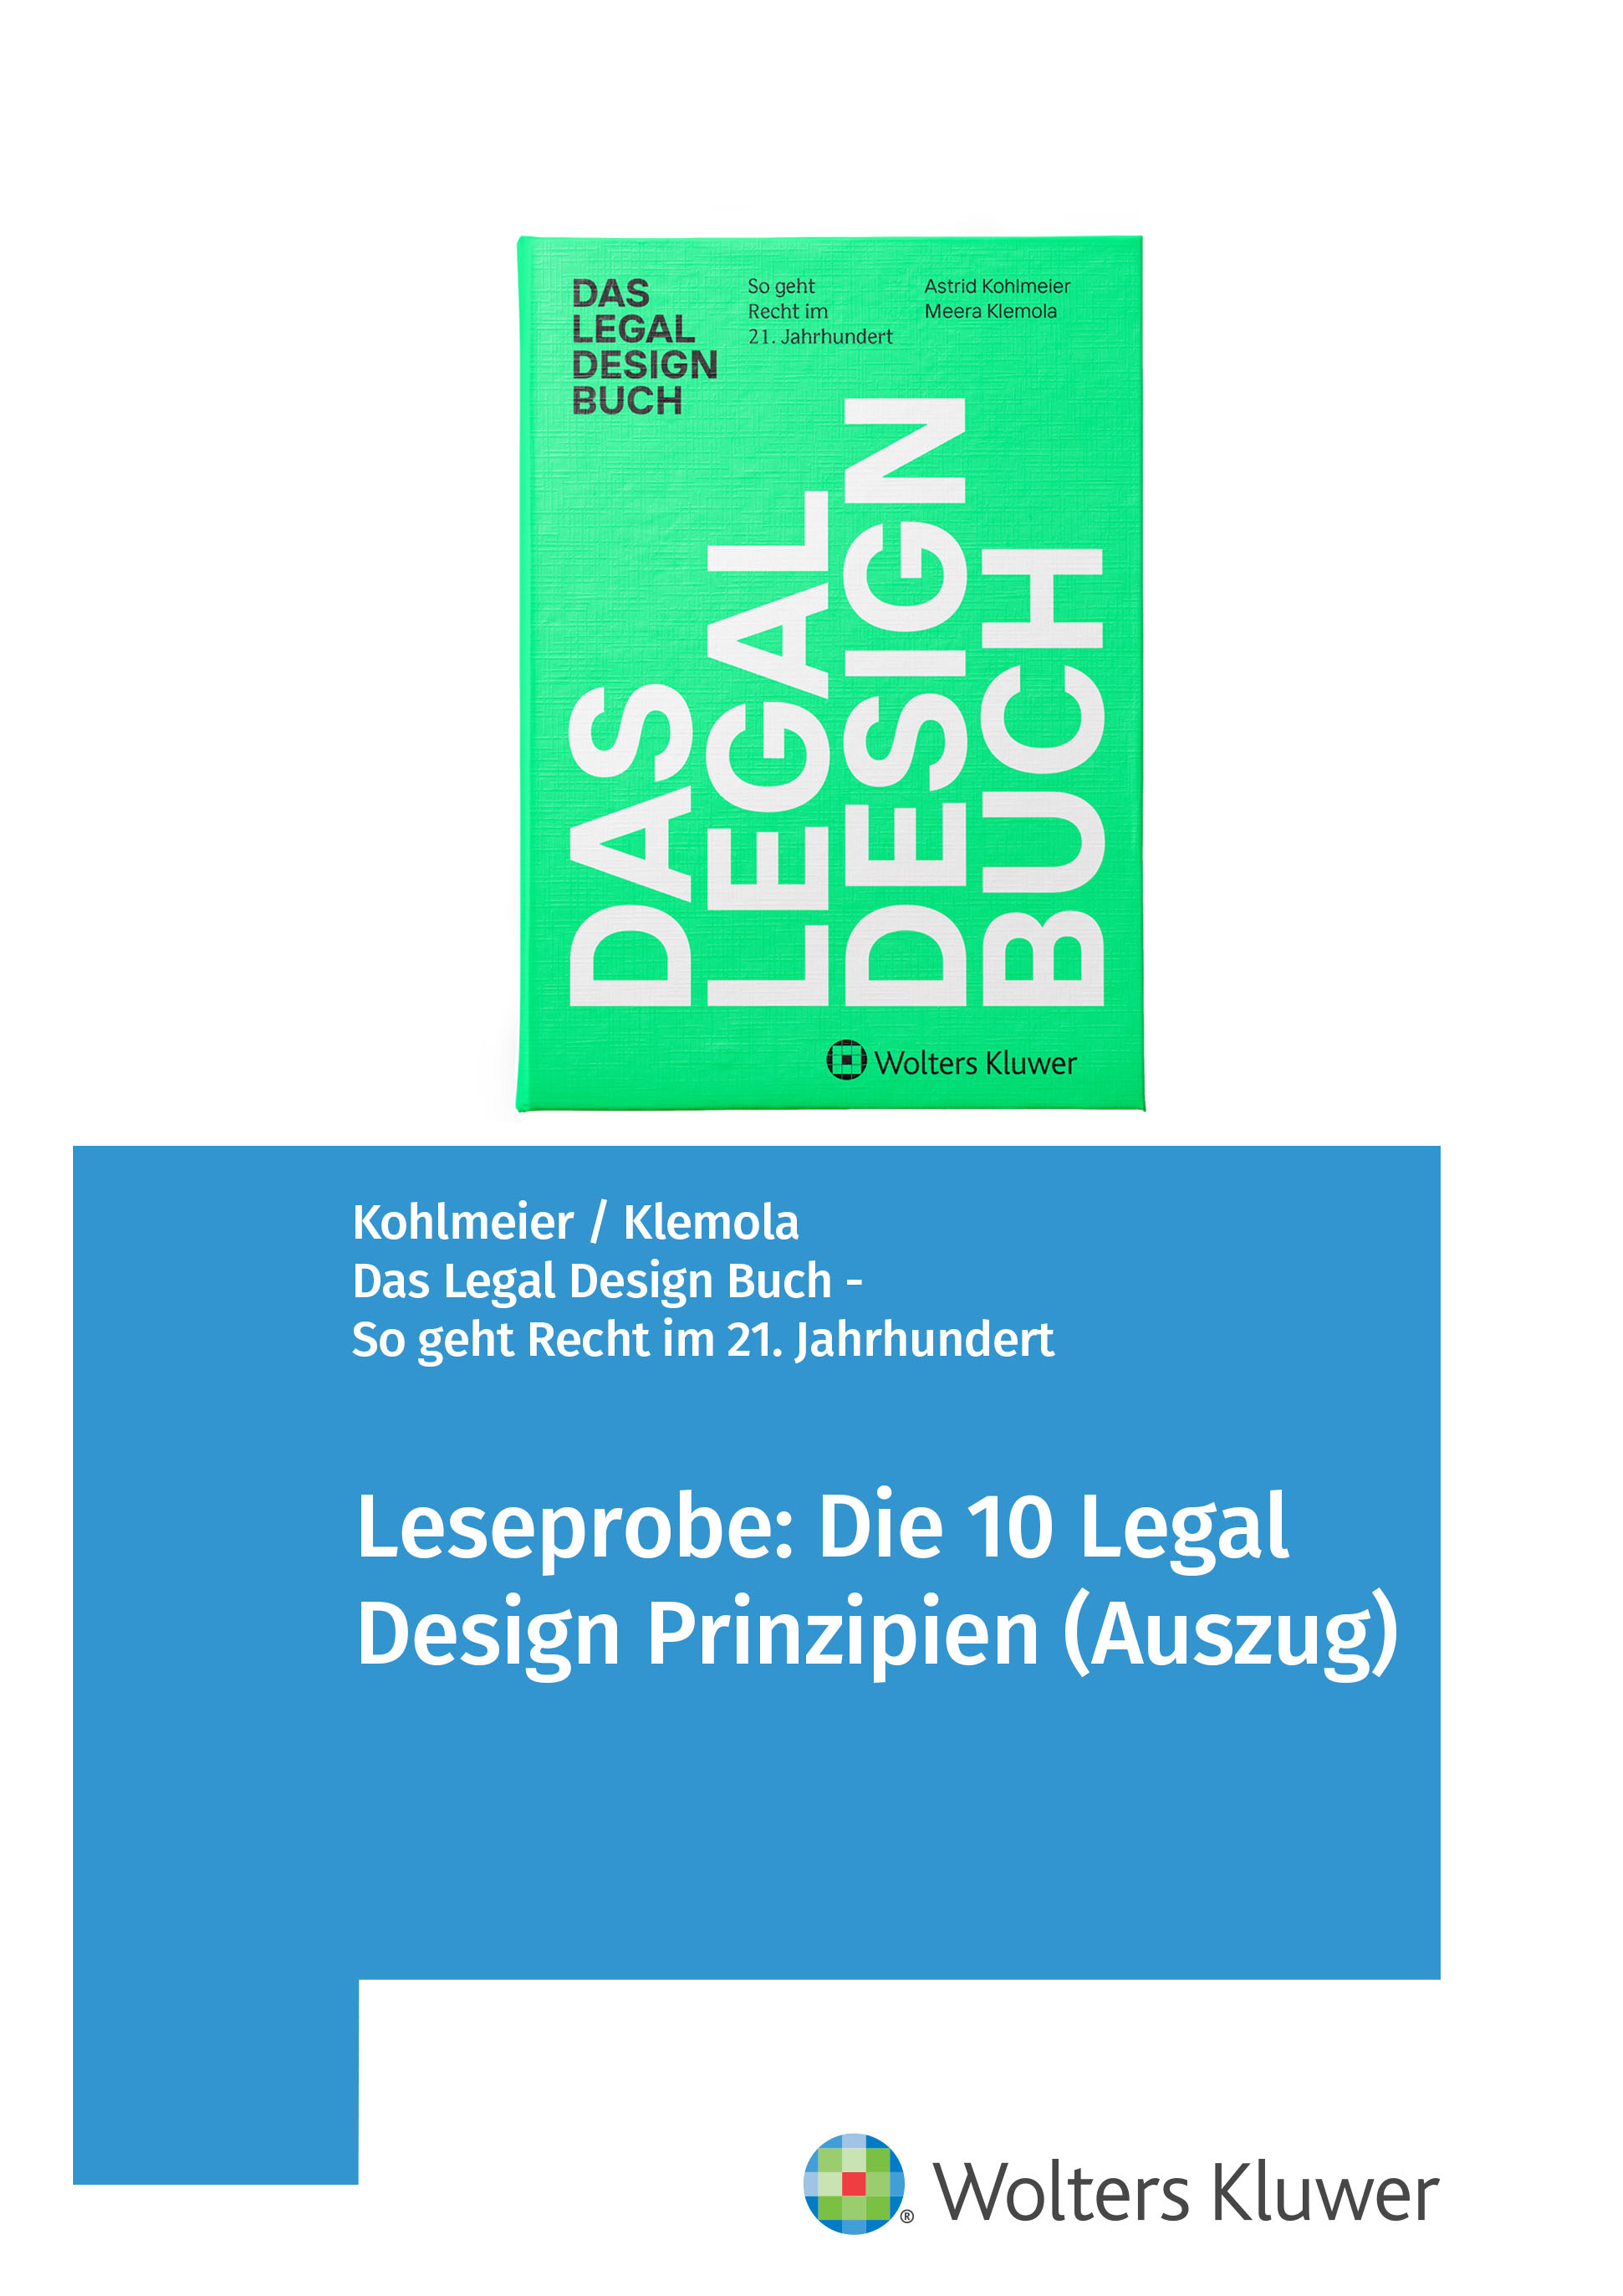 Legal-Design-Buch-Leseprobe